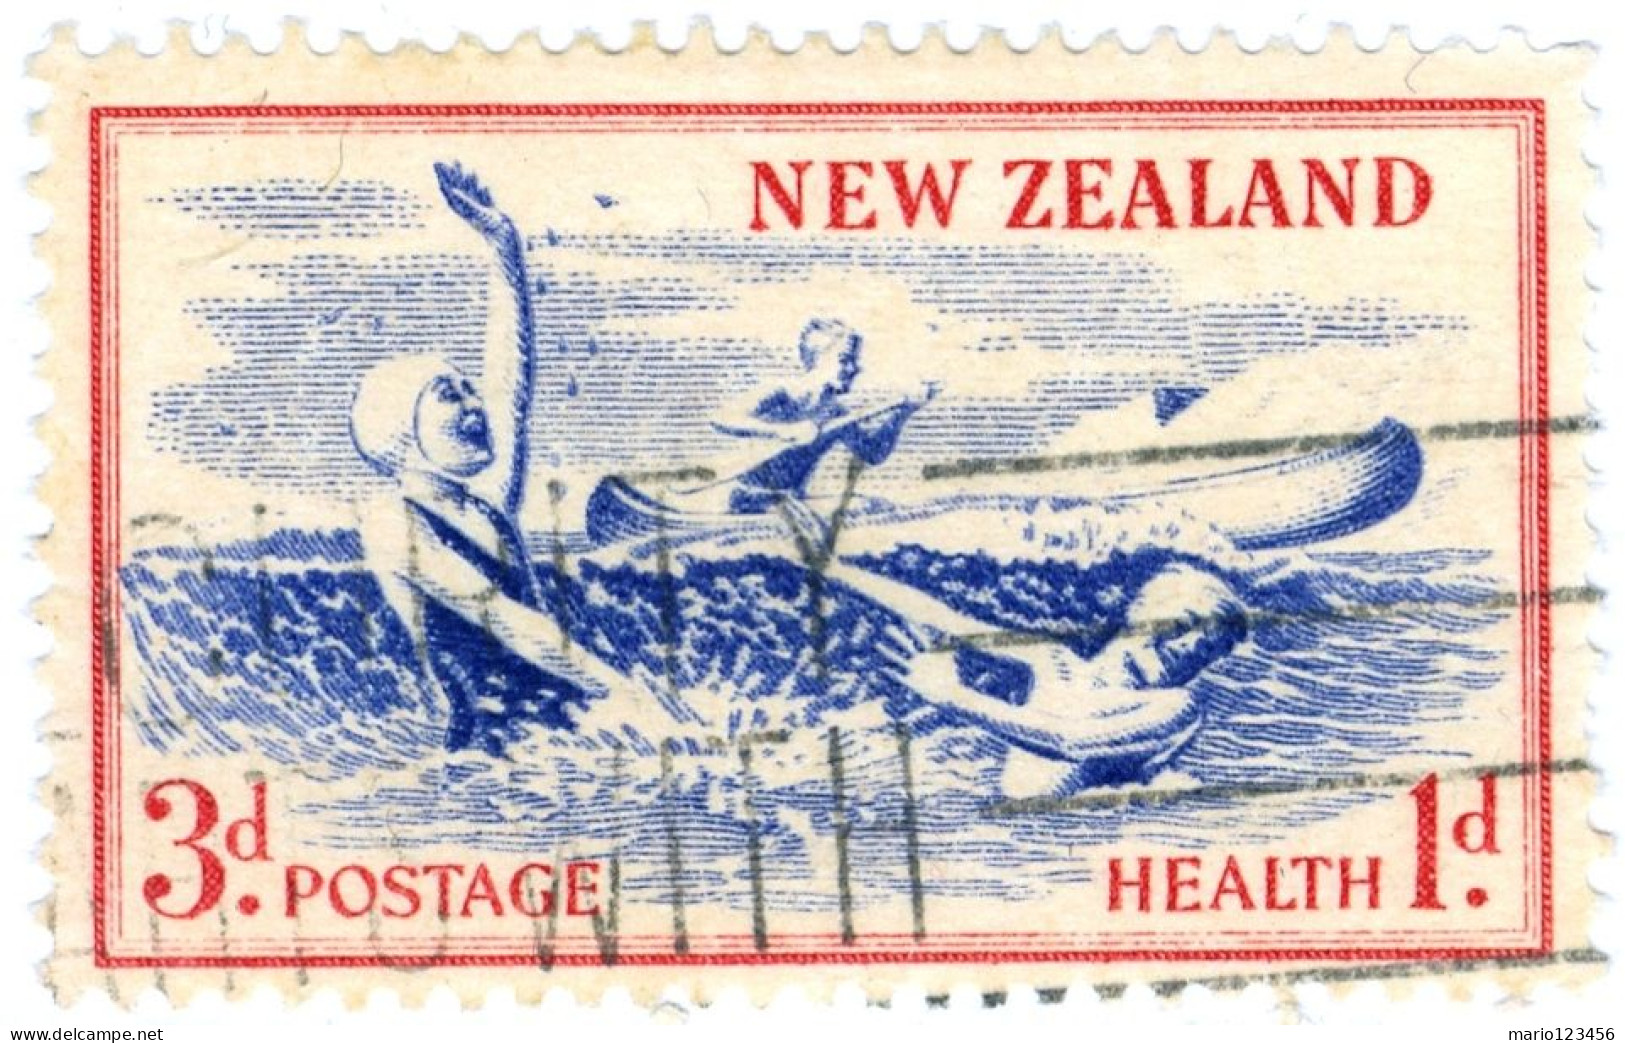 NUOVA ZELANDA, NEW ZEALAND, SPORT, 1957, FRANCOBOLLI USATI Scott:NZ B53, Yt:NZ 363, Sg:NZ 762 - Usati